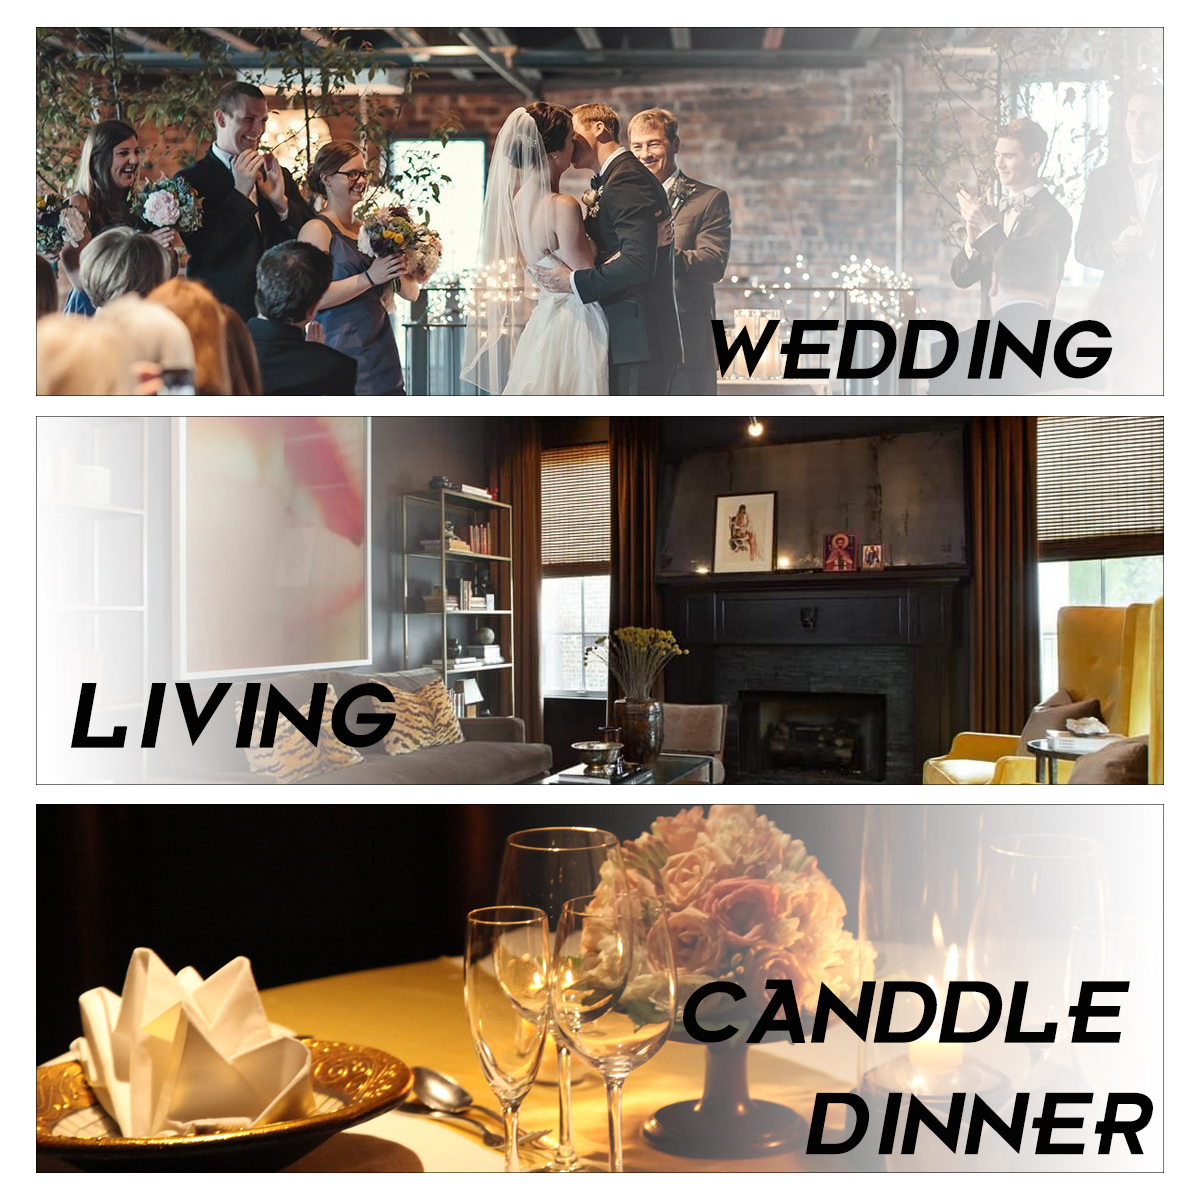 Candle-Holder-Tealight-Candlestick-Holders-Tray-Desktop-Decorations-Decor-for-Wedding-Living-Candlel-1785069-2